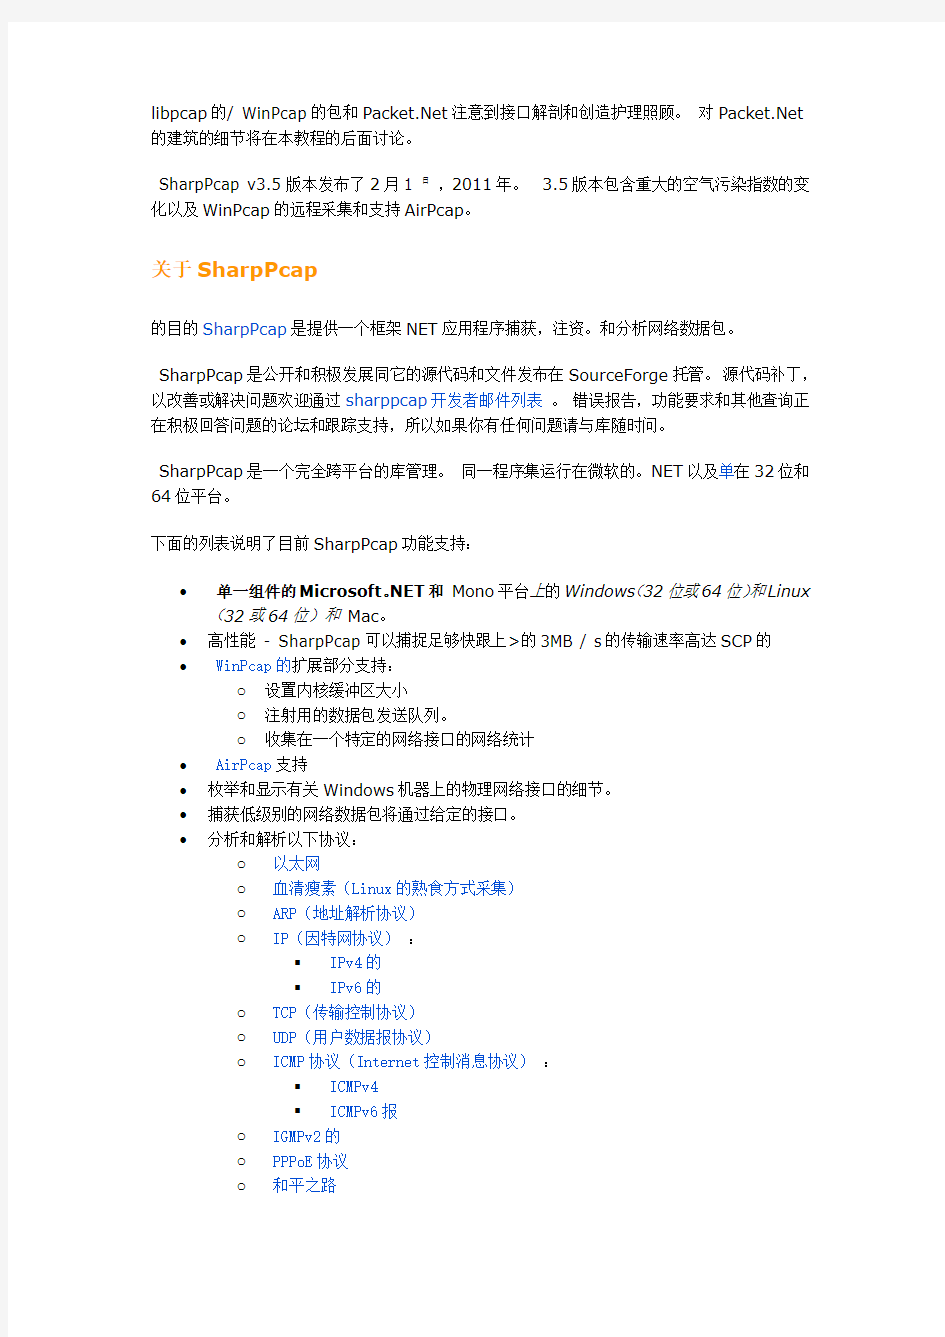 SharpPcap 3.4.0 开发全攻略( 中文版)